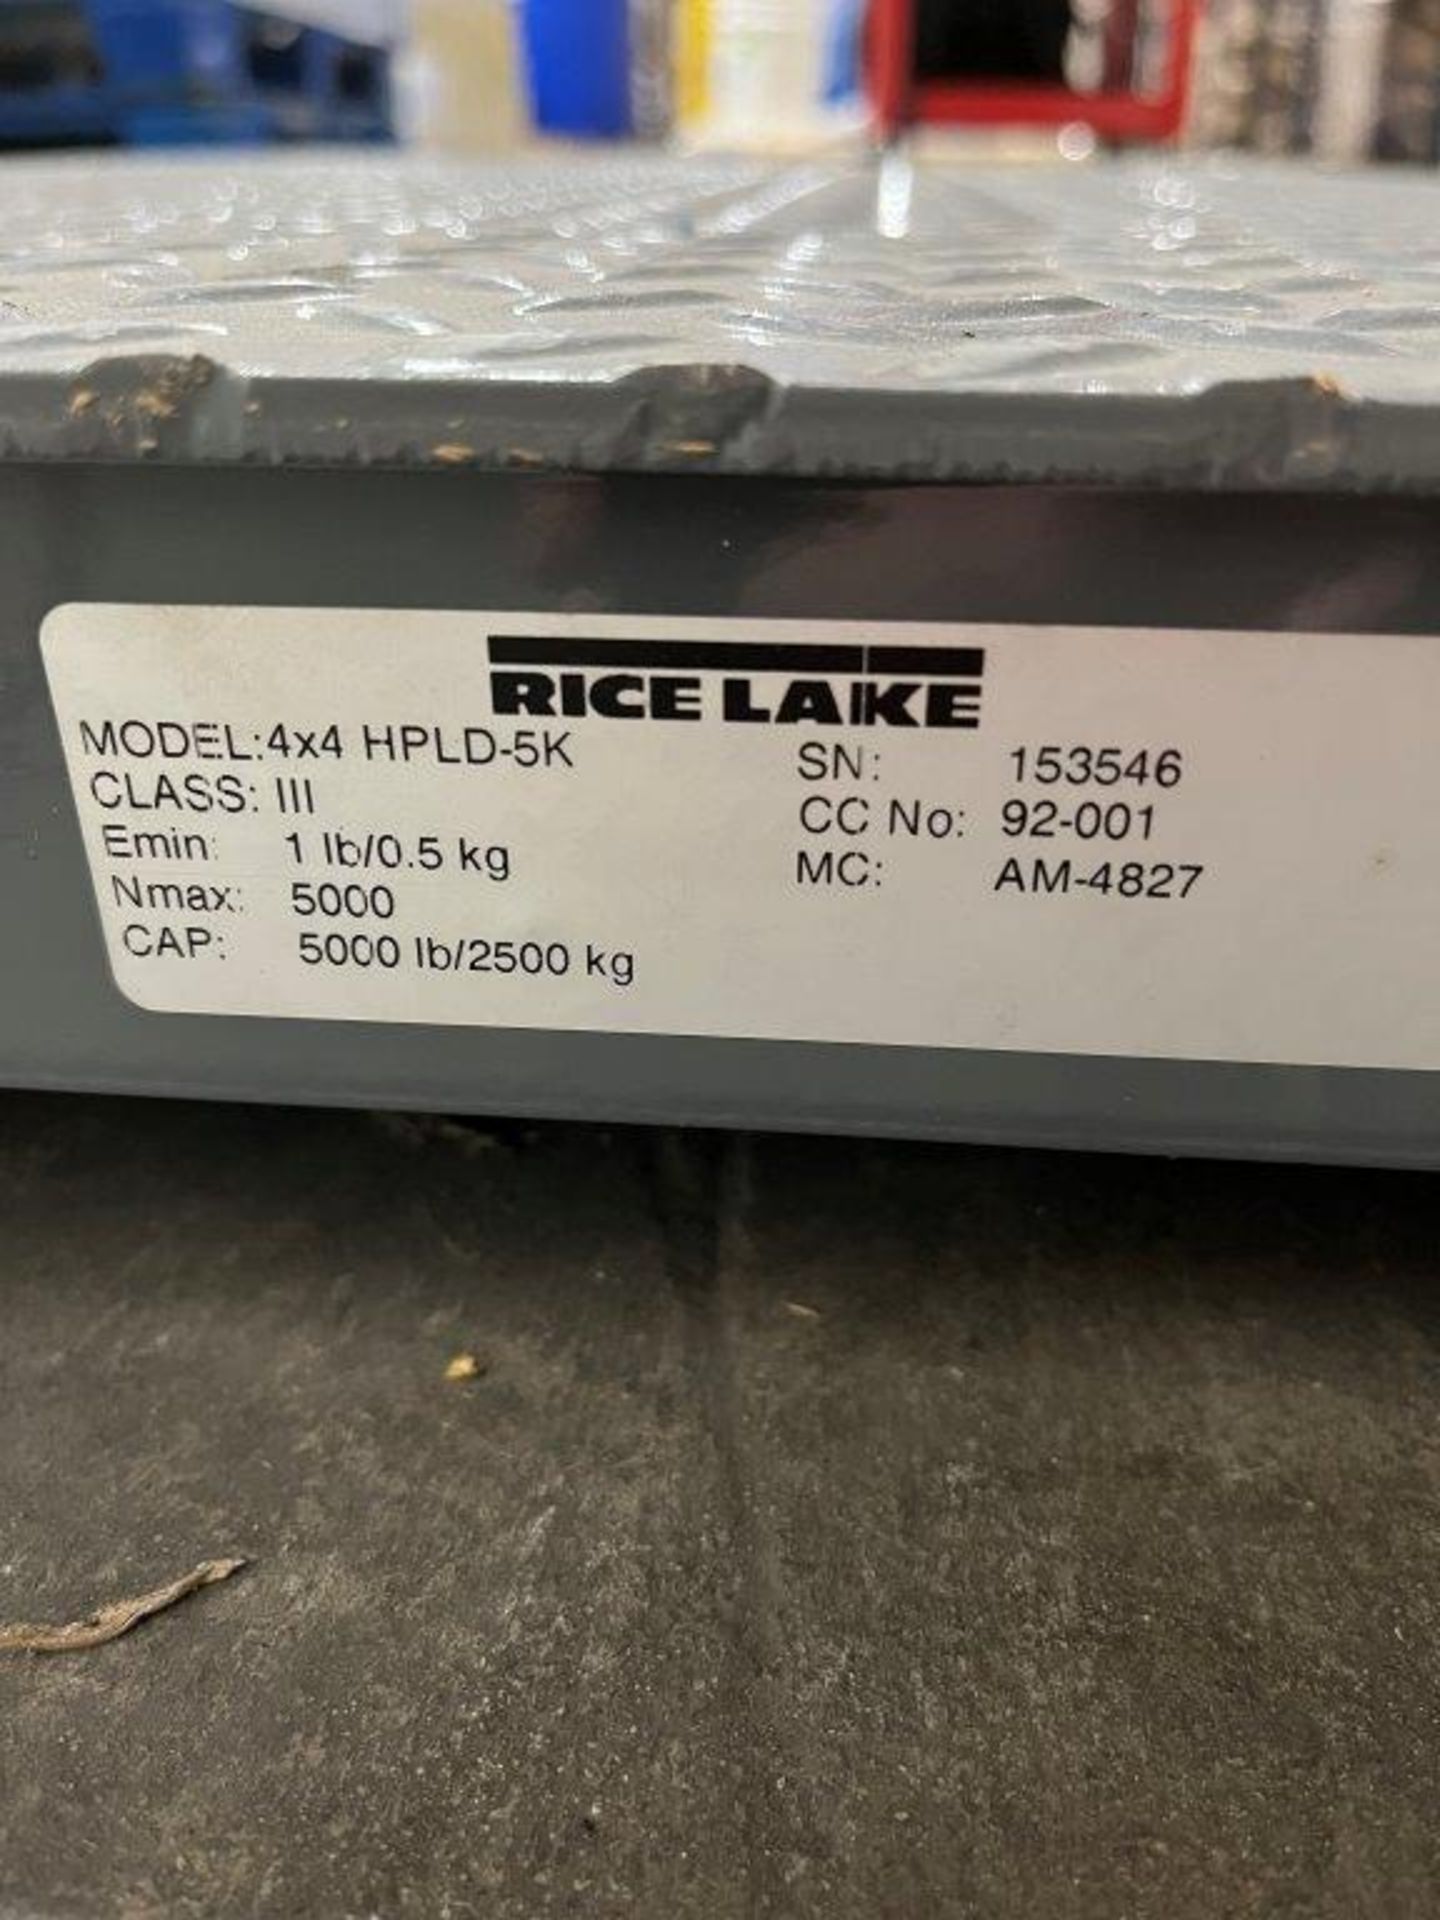 Rice Lake 4 x 4 HPLD-5K Class III 5,000-Lb Capacity Platform Scale - Image 2 of 3